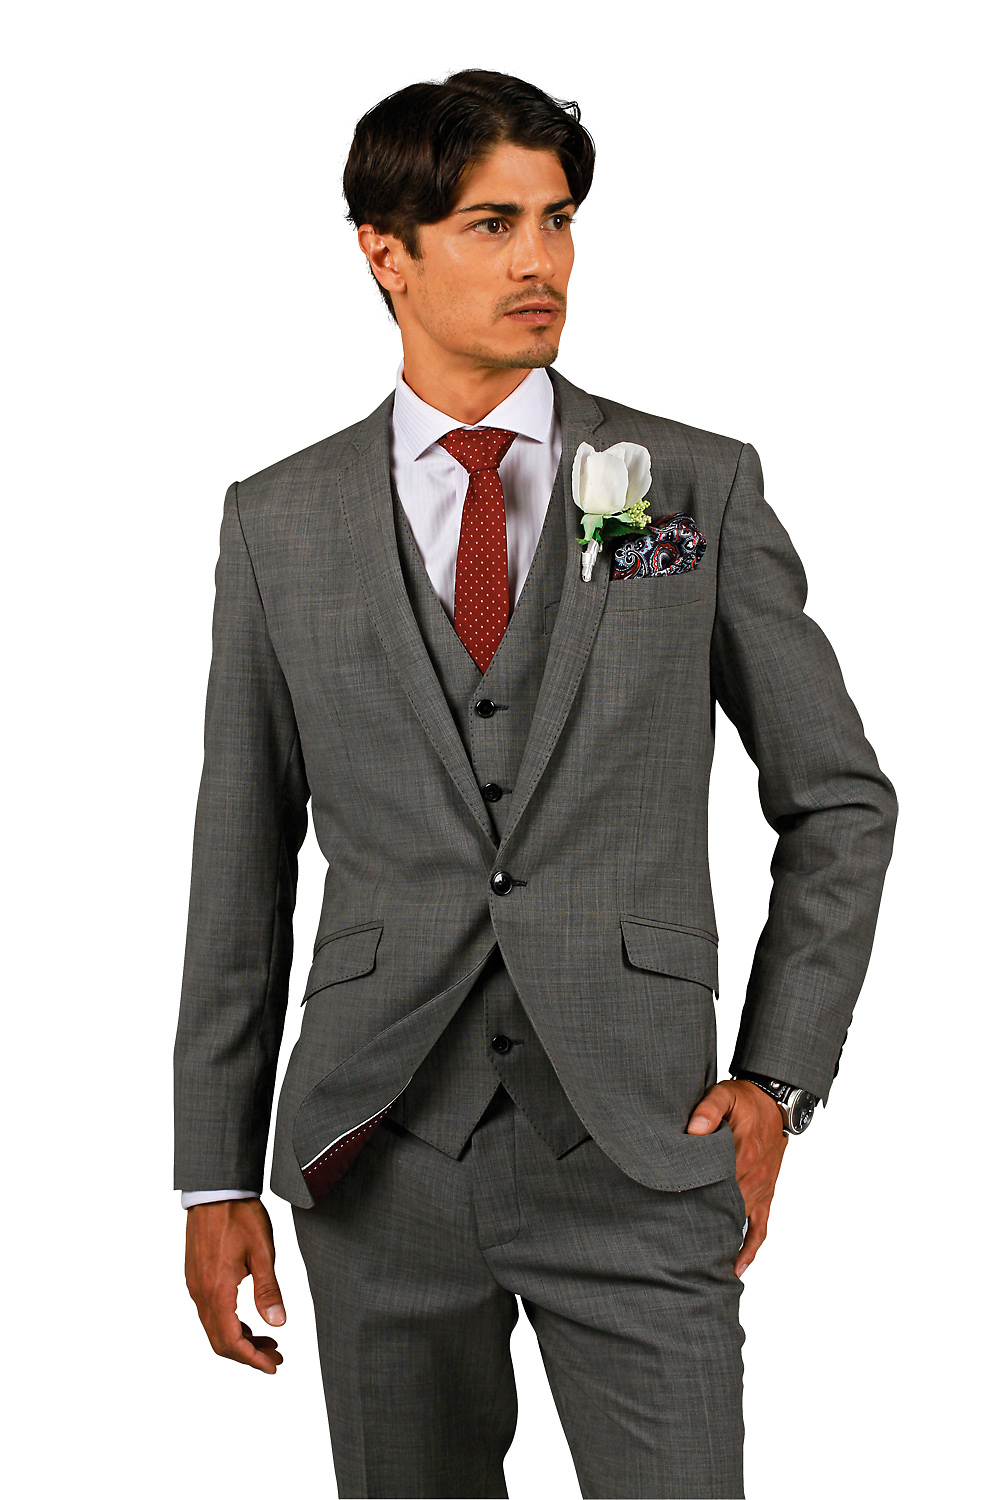 Montagio Custom Tailoring Sydney Tailor Made Men's Suits